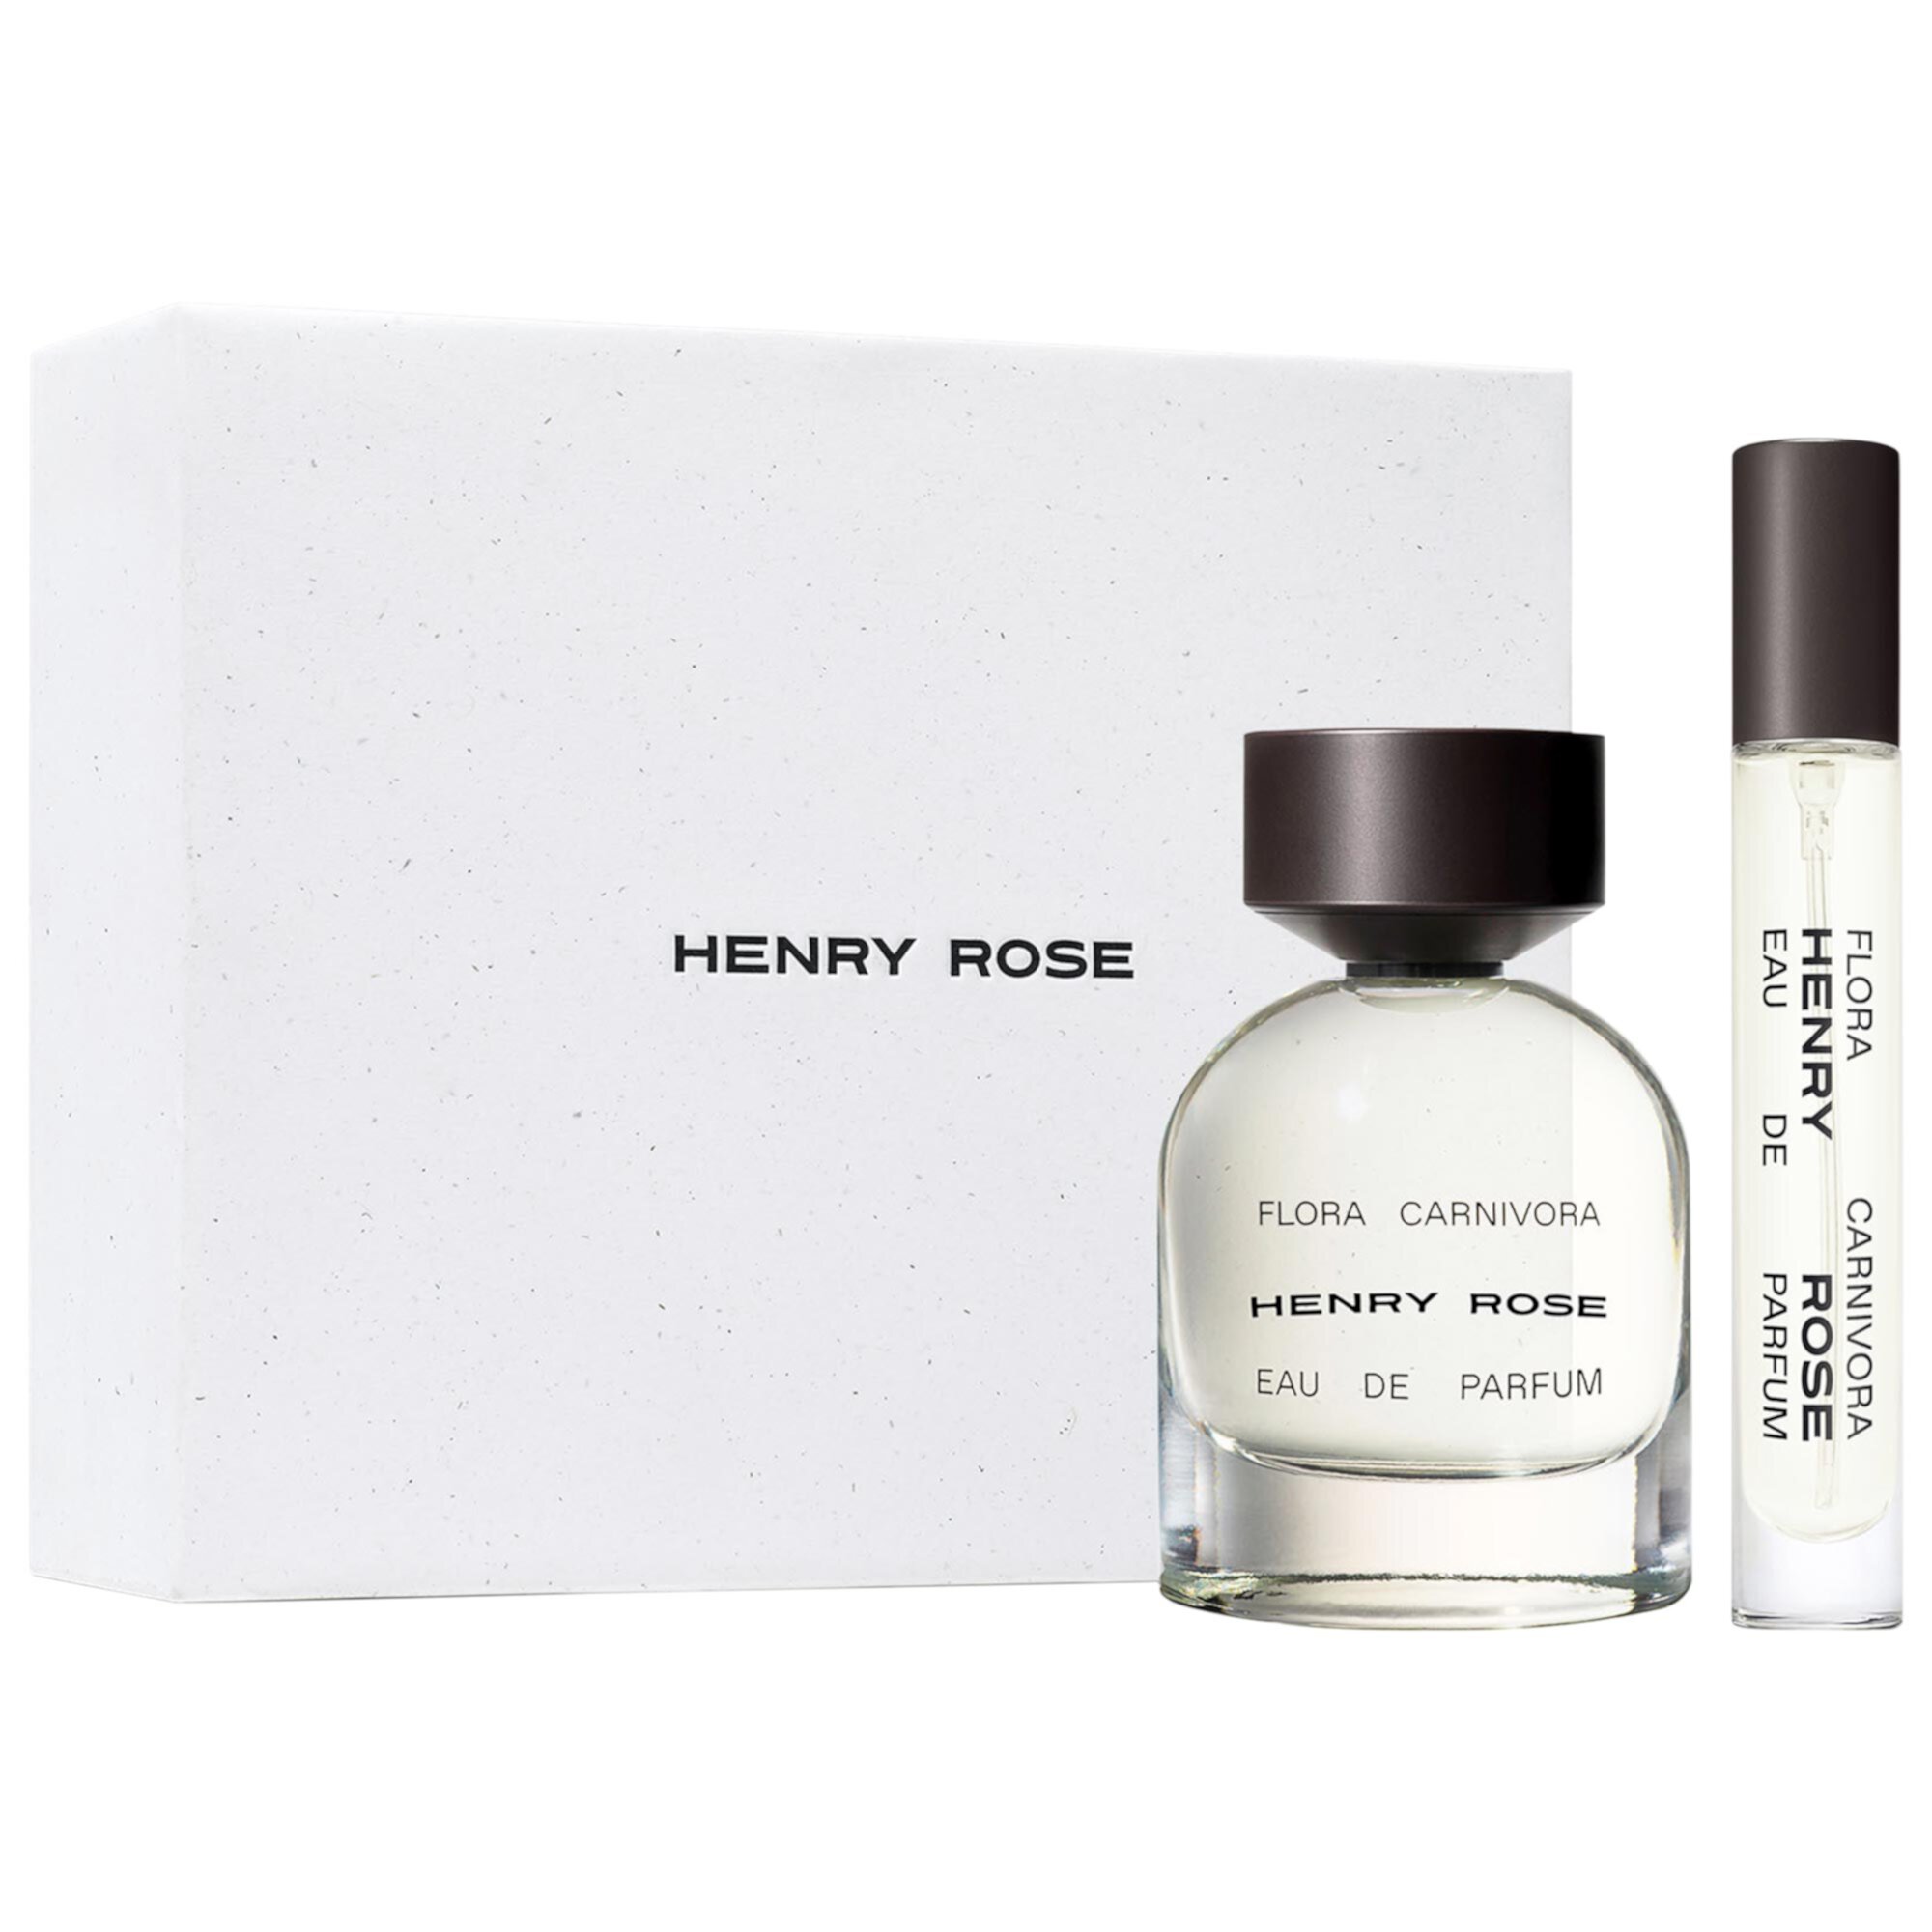 Flora Carnivora Eau de Parfum Fragrance Set Henry Rose